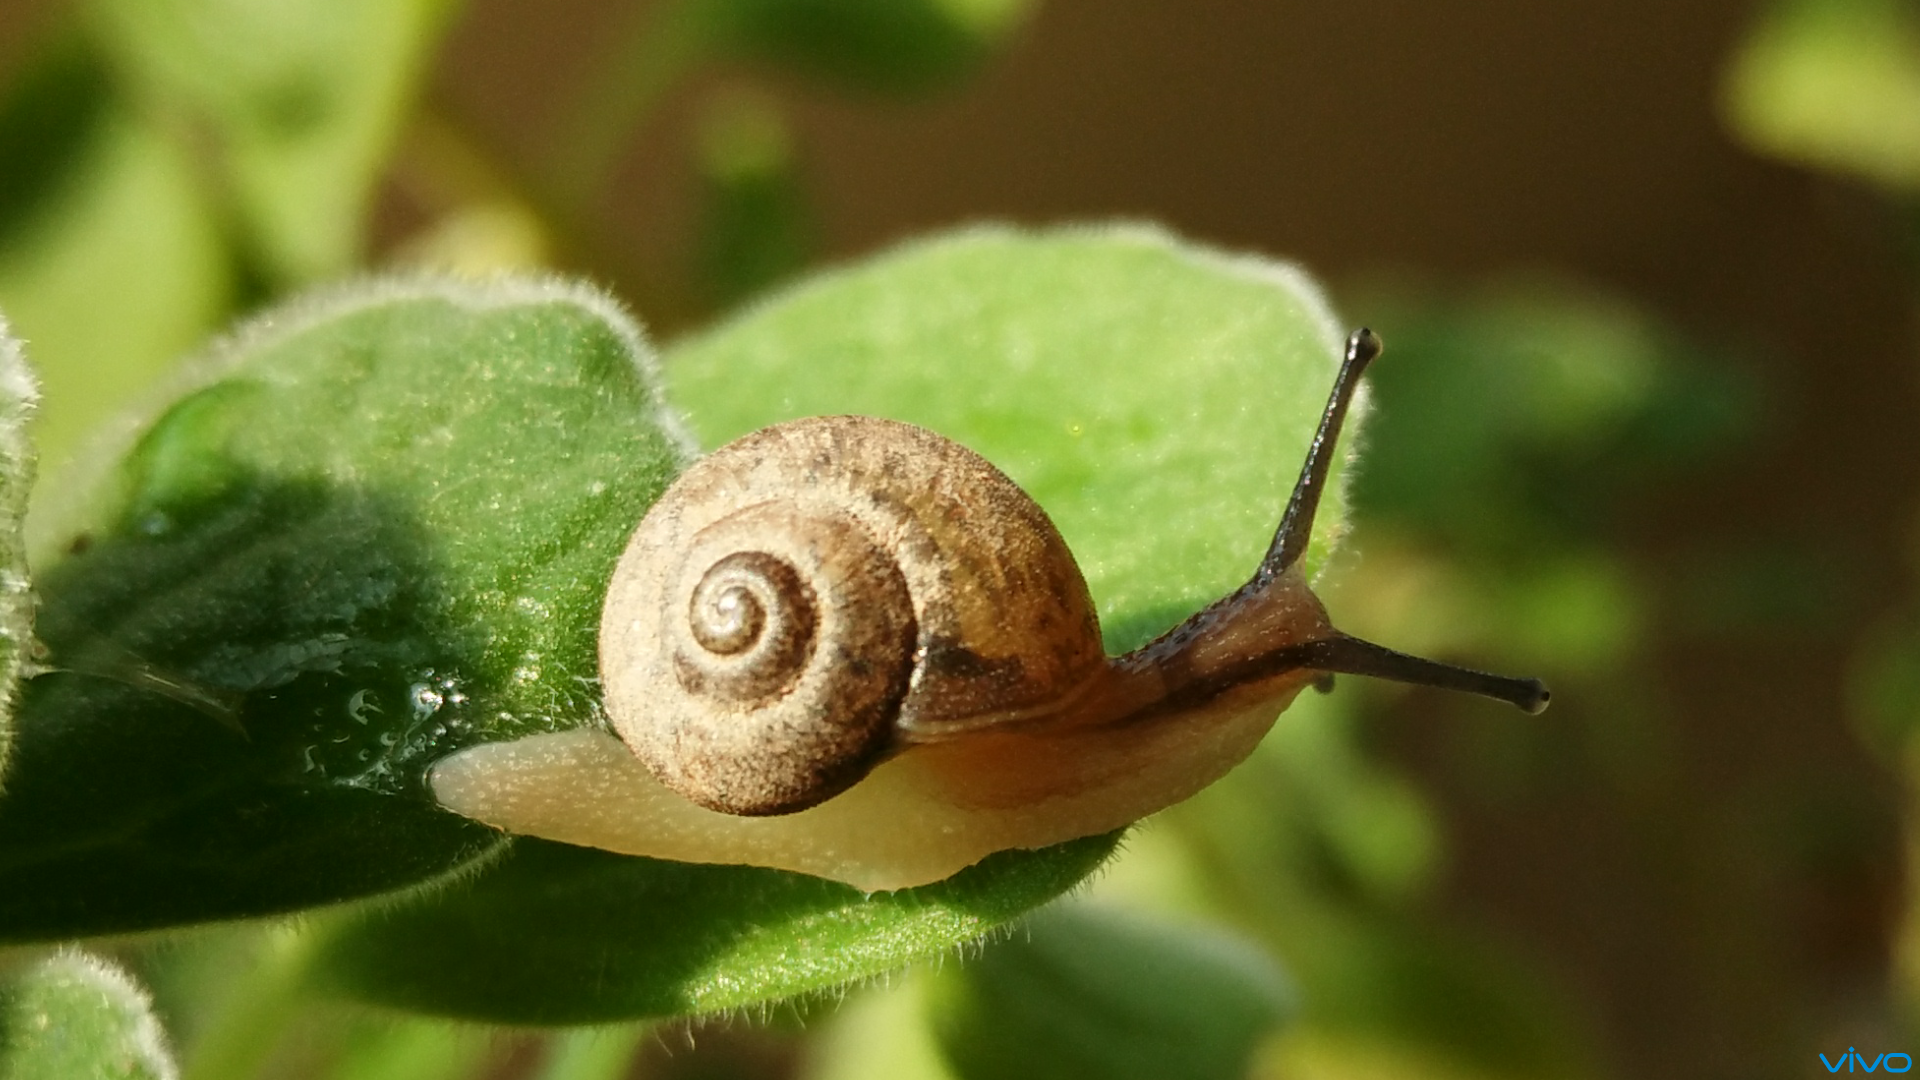 【xshot】一只蜗牛的精彩世界